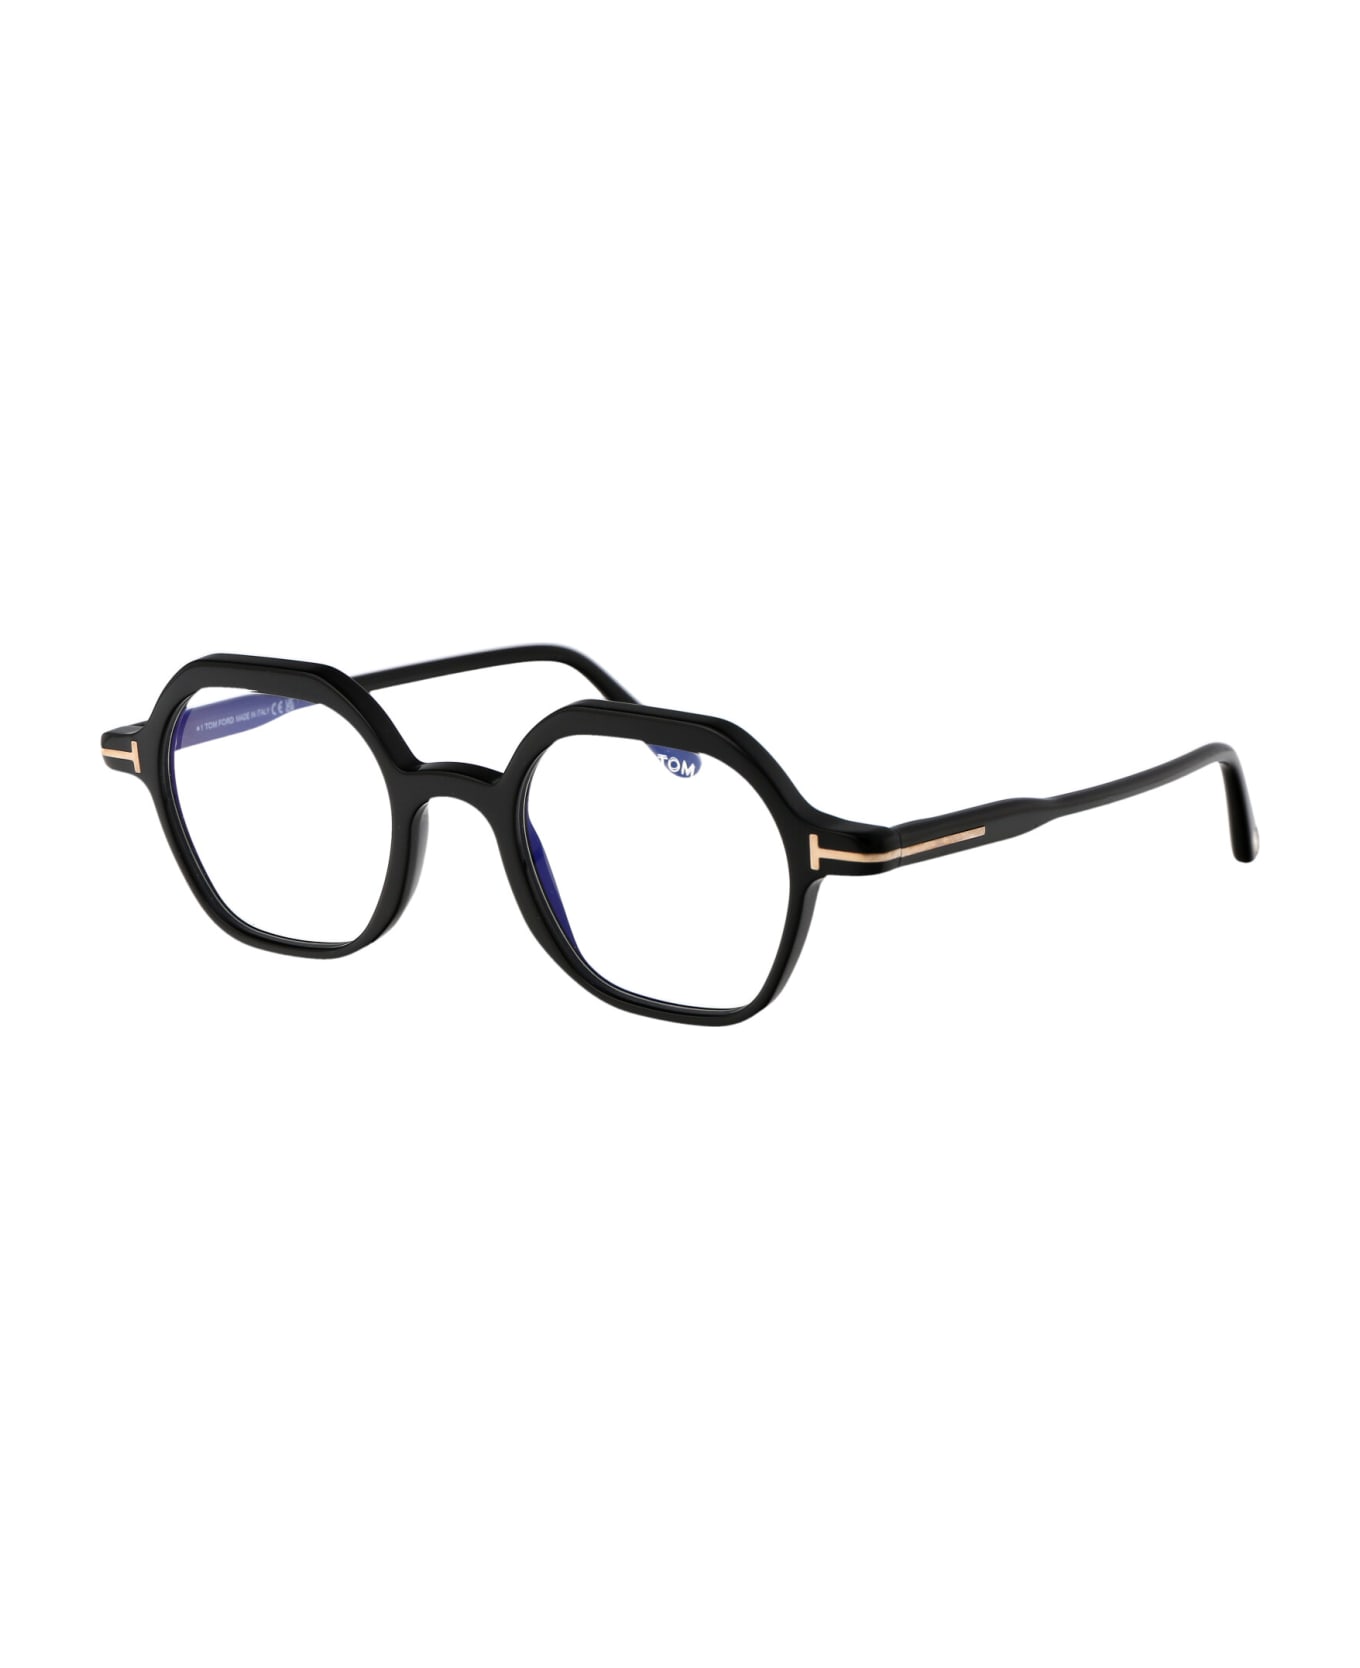 Tom Ford Eyewear Ft5900-b Glasses - 001 Nero Lucido アイウェア